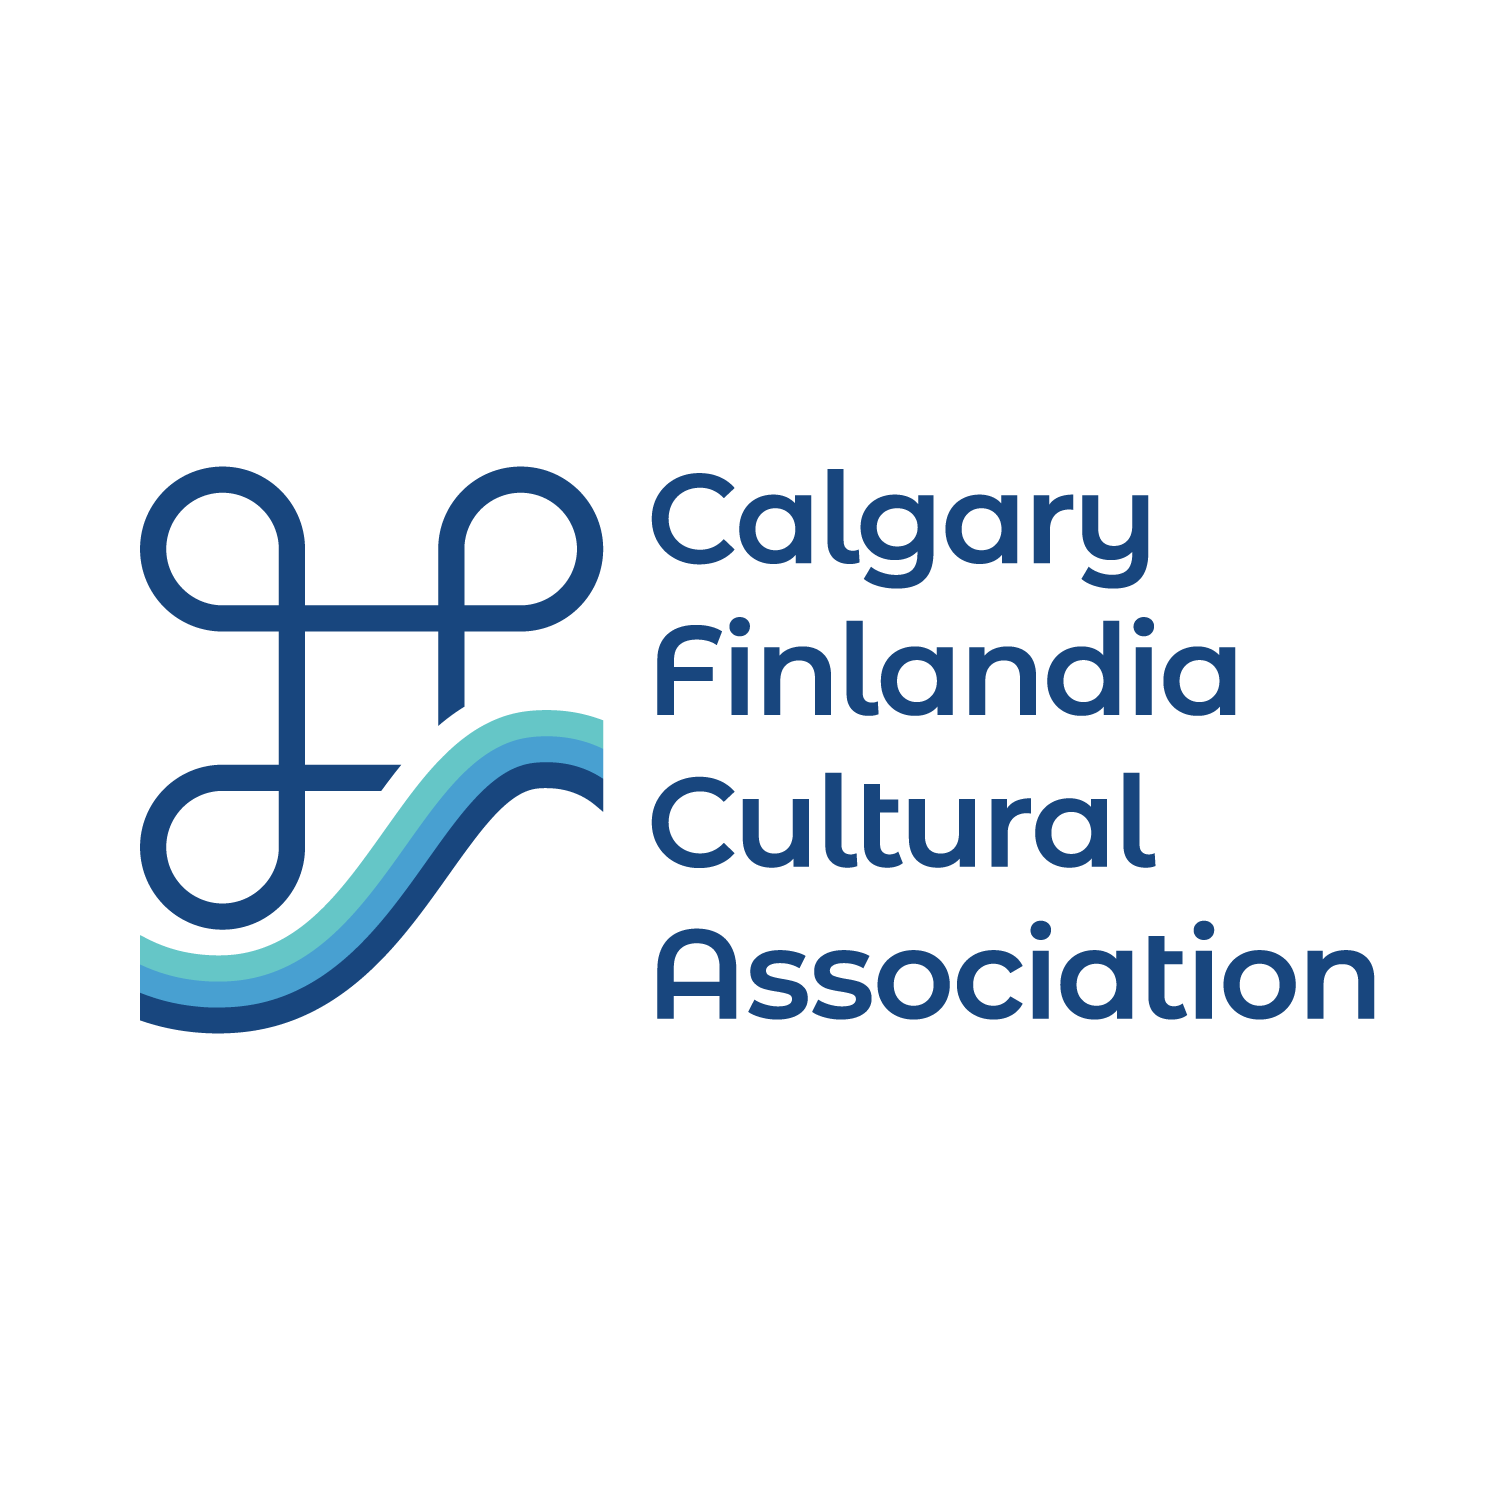 Calgary FInlandia Association